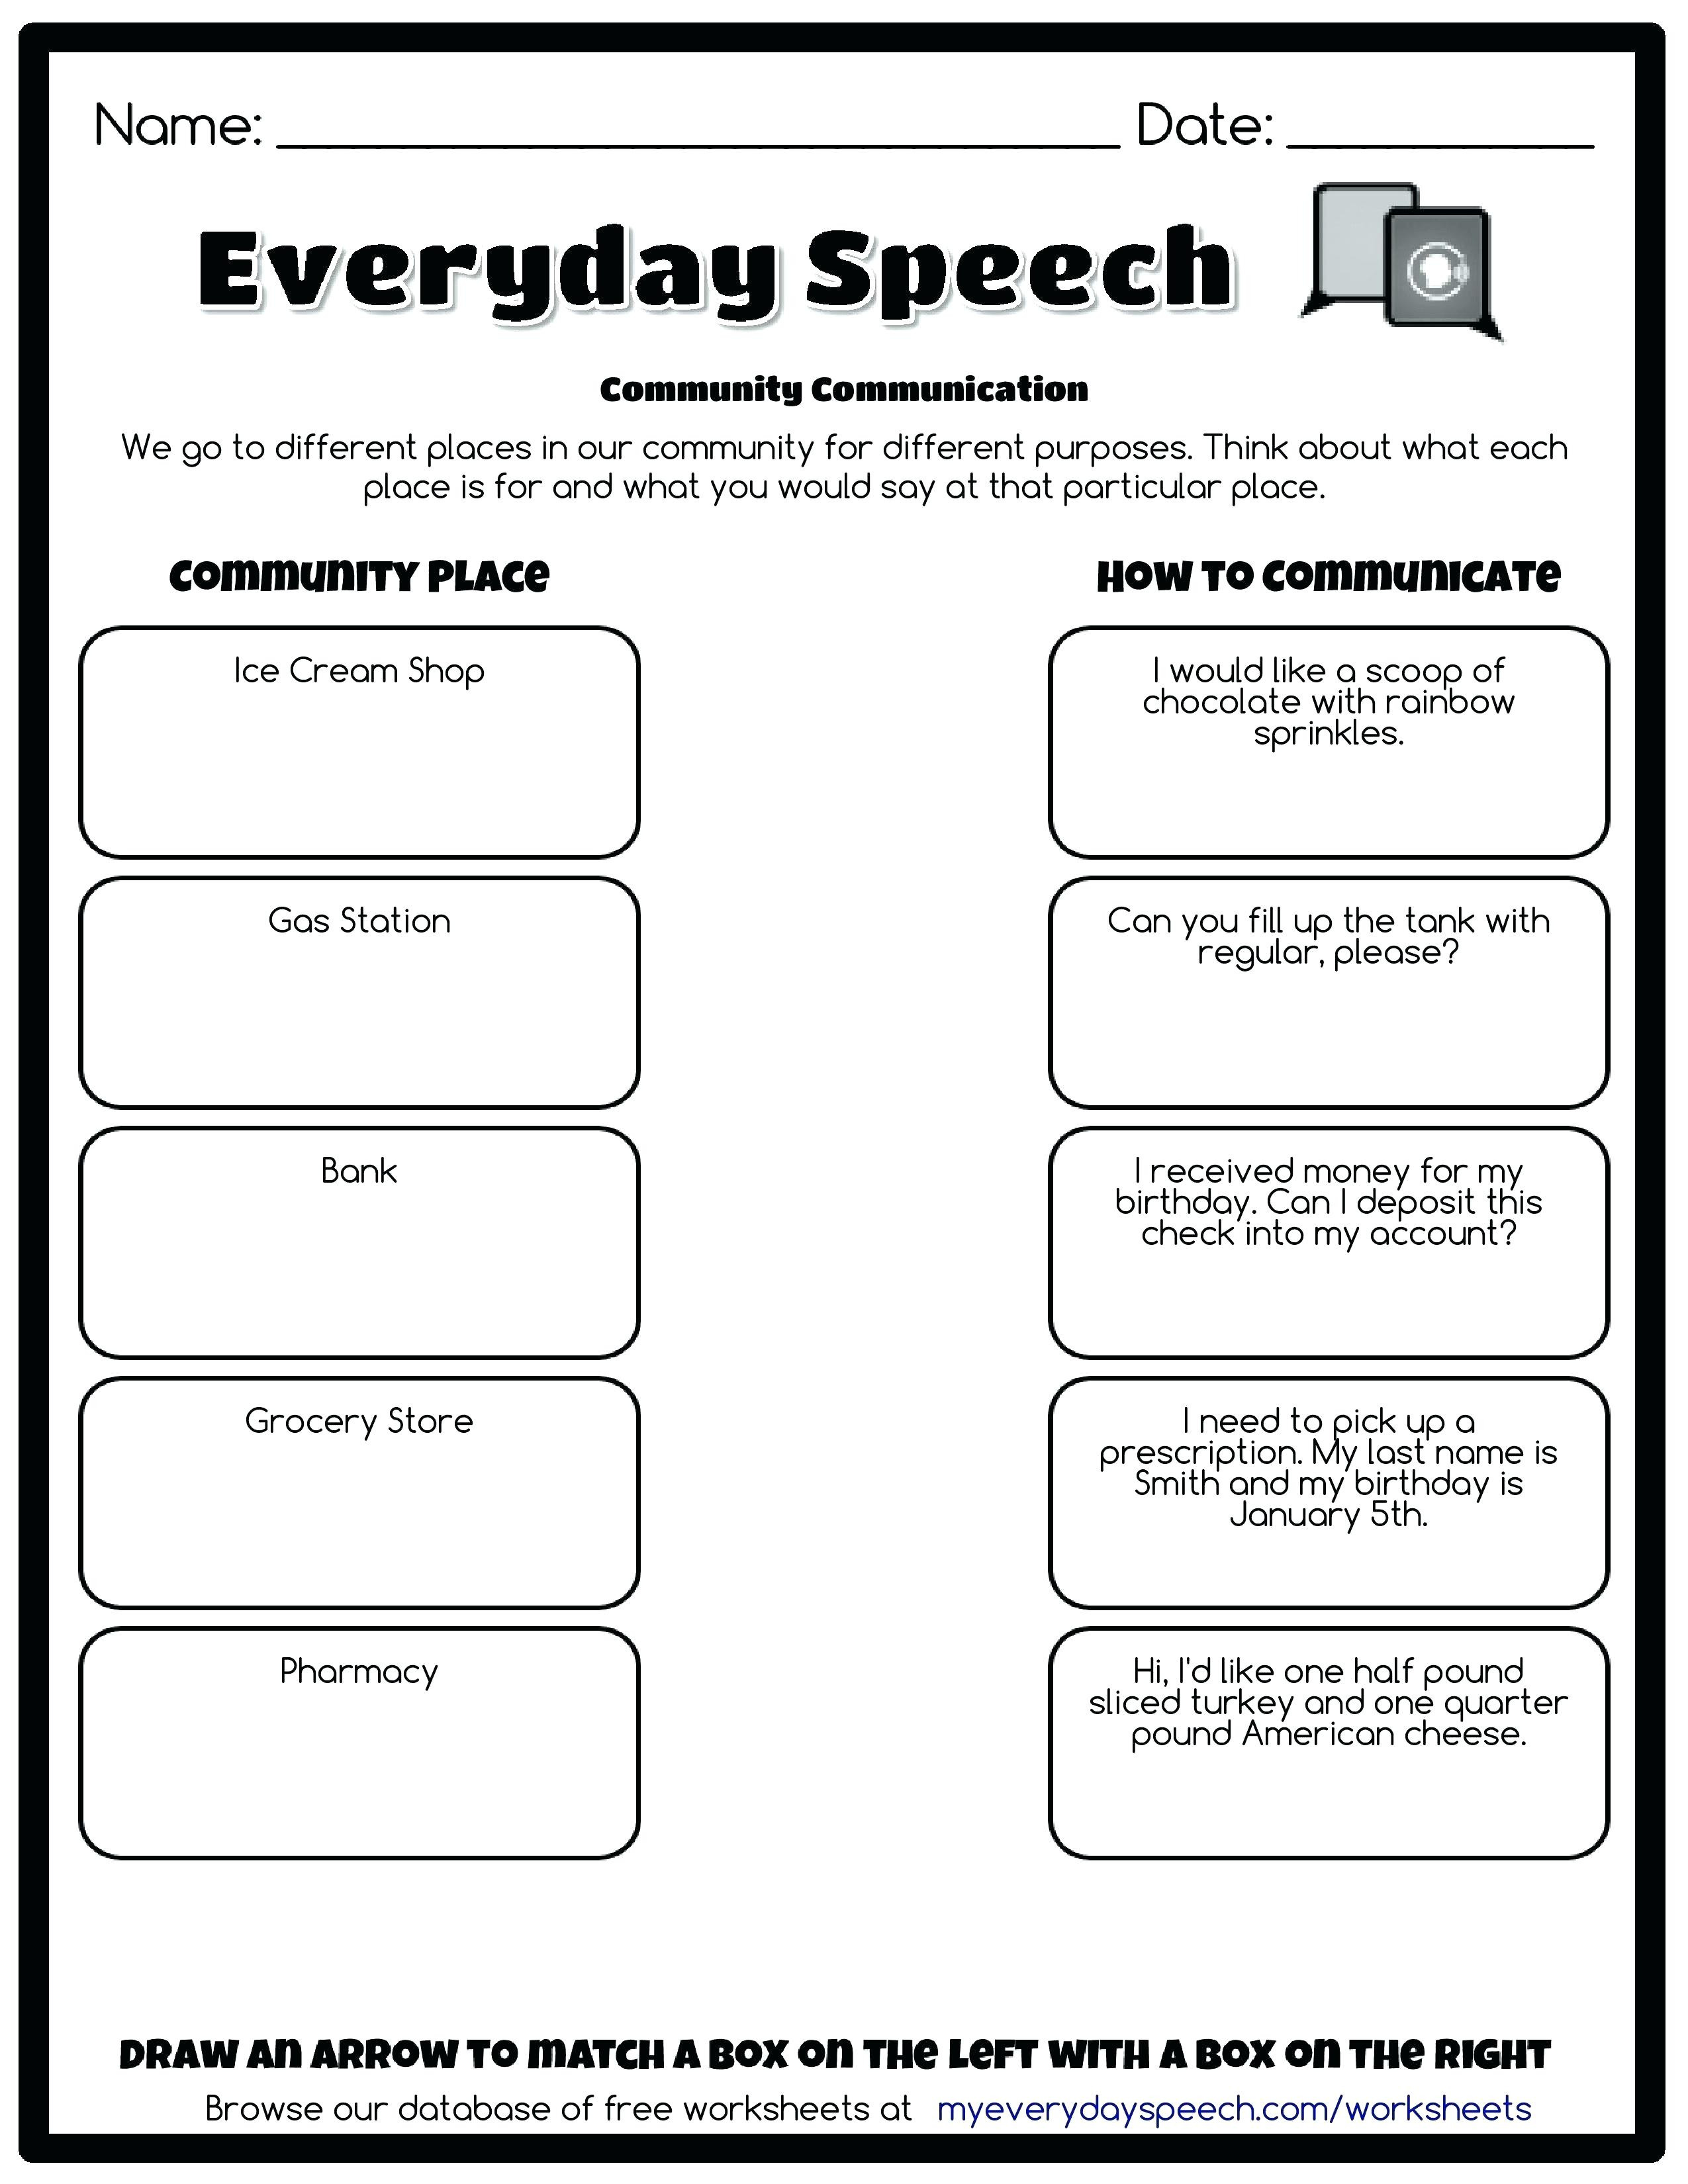 assignment building communication skills reading vocabulary